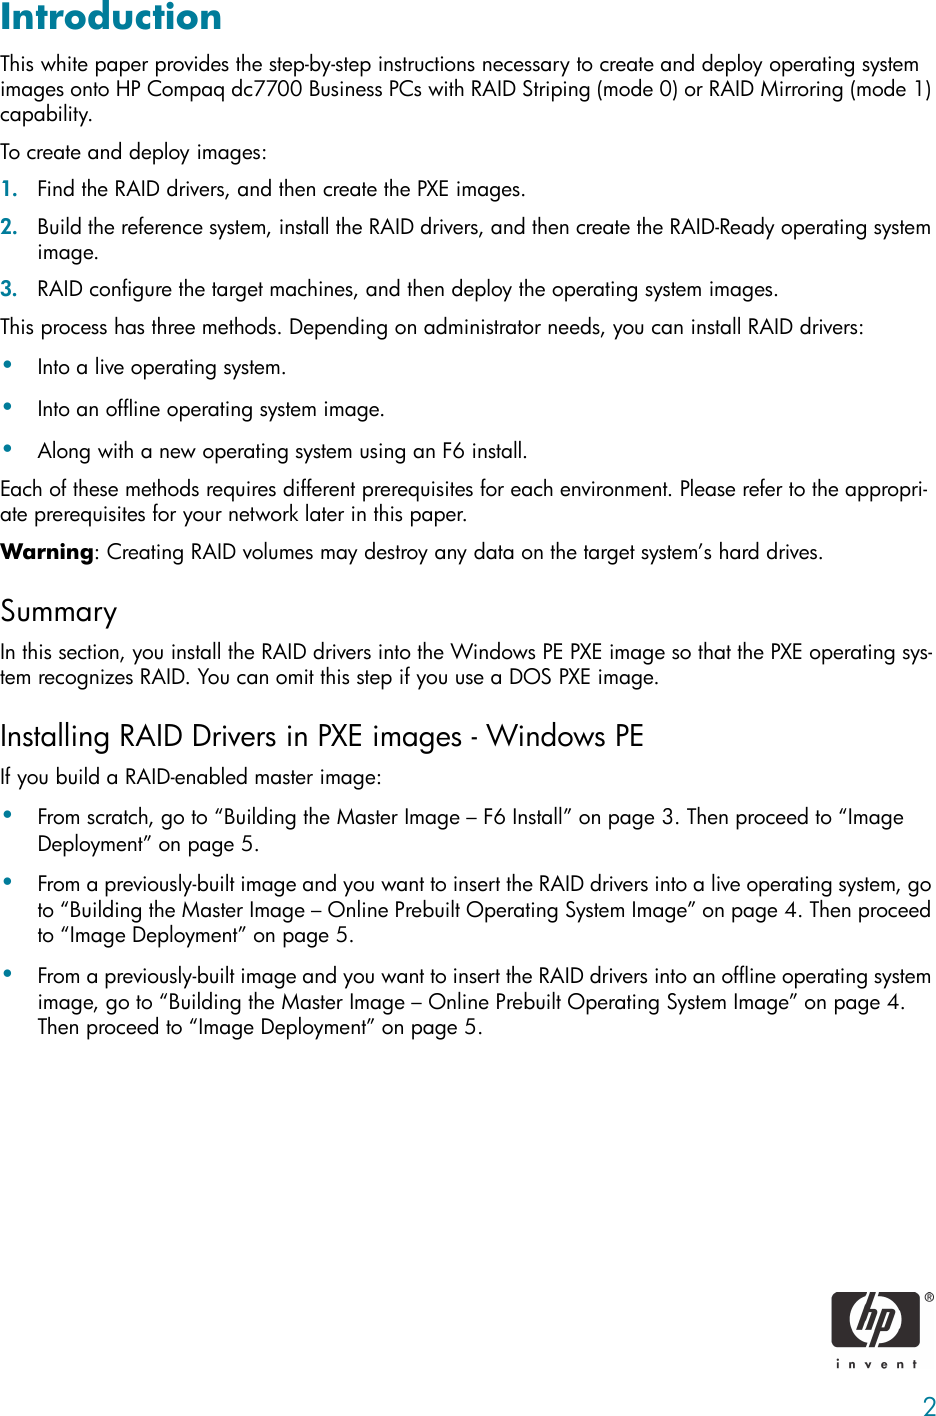 Page 2 of 7 - HP RAID Image Deployment On Compaq Dc7000 Series Business PCs C00767036